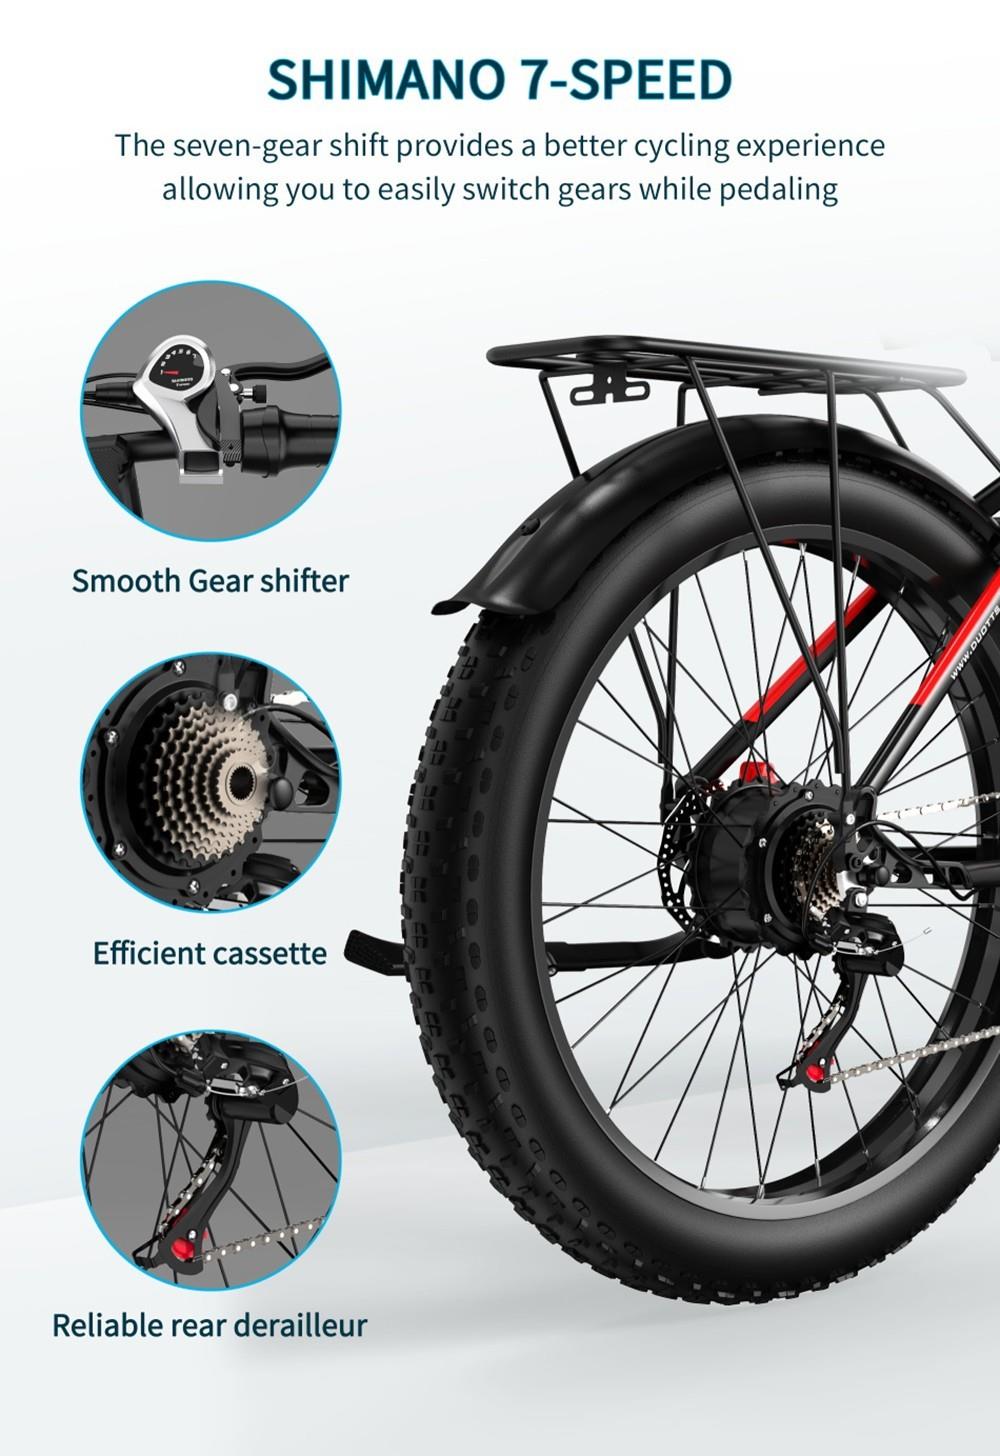 DUOTTS F26 26*4.0 Inch Fat Tire Electric Bike, 750W*2 Dual Motors, LG 17.5Ah Battery, 55km/h Max Speed - Silver